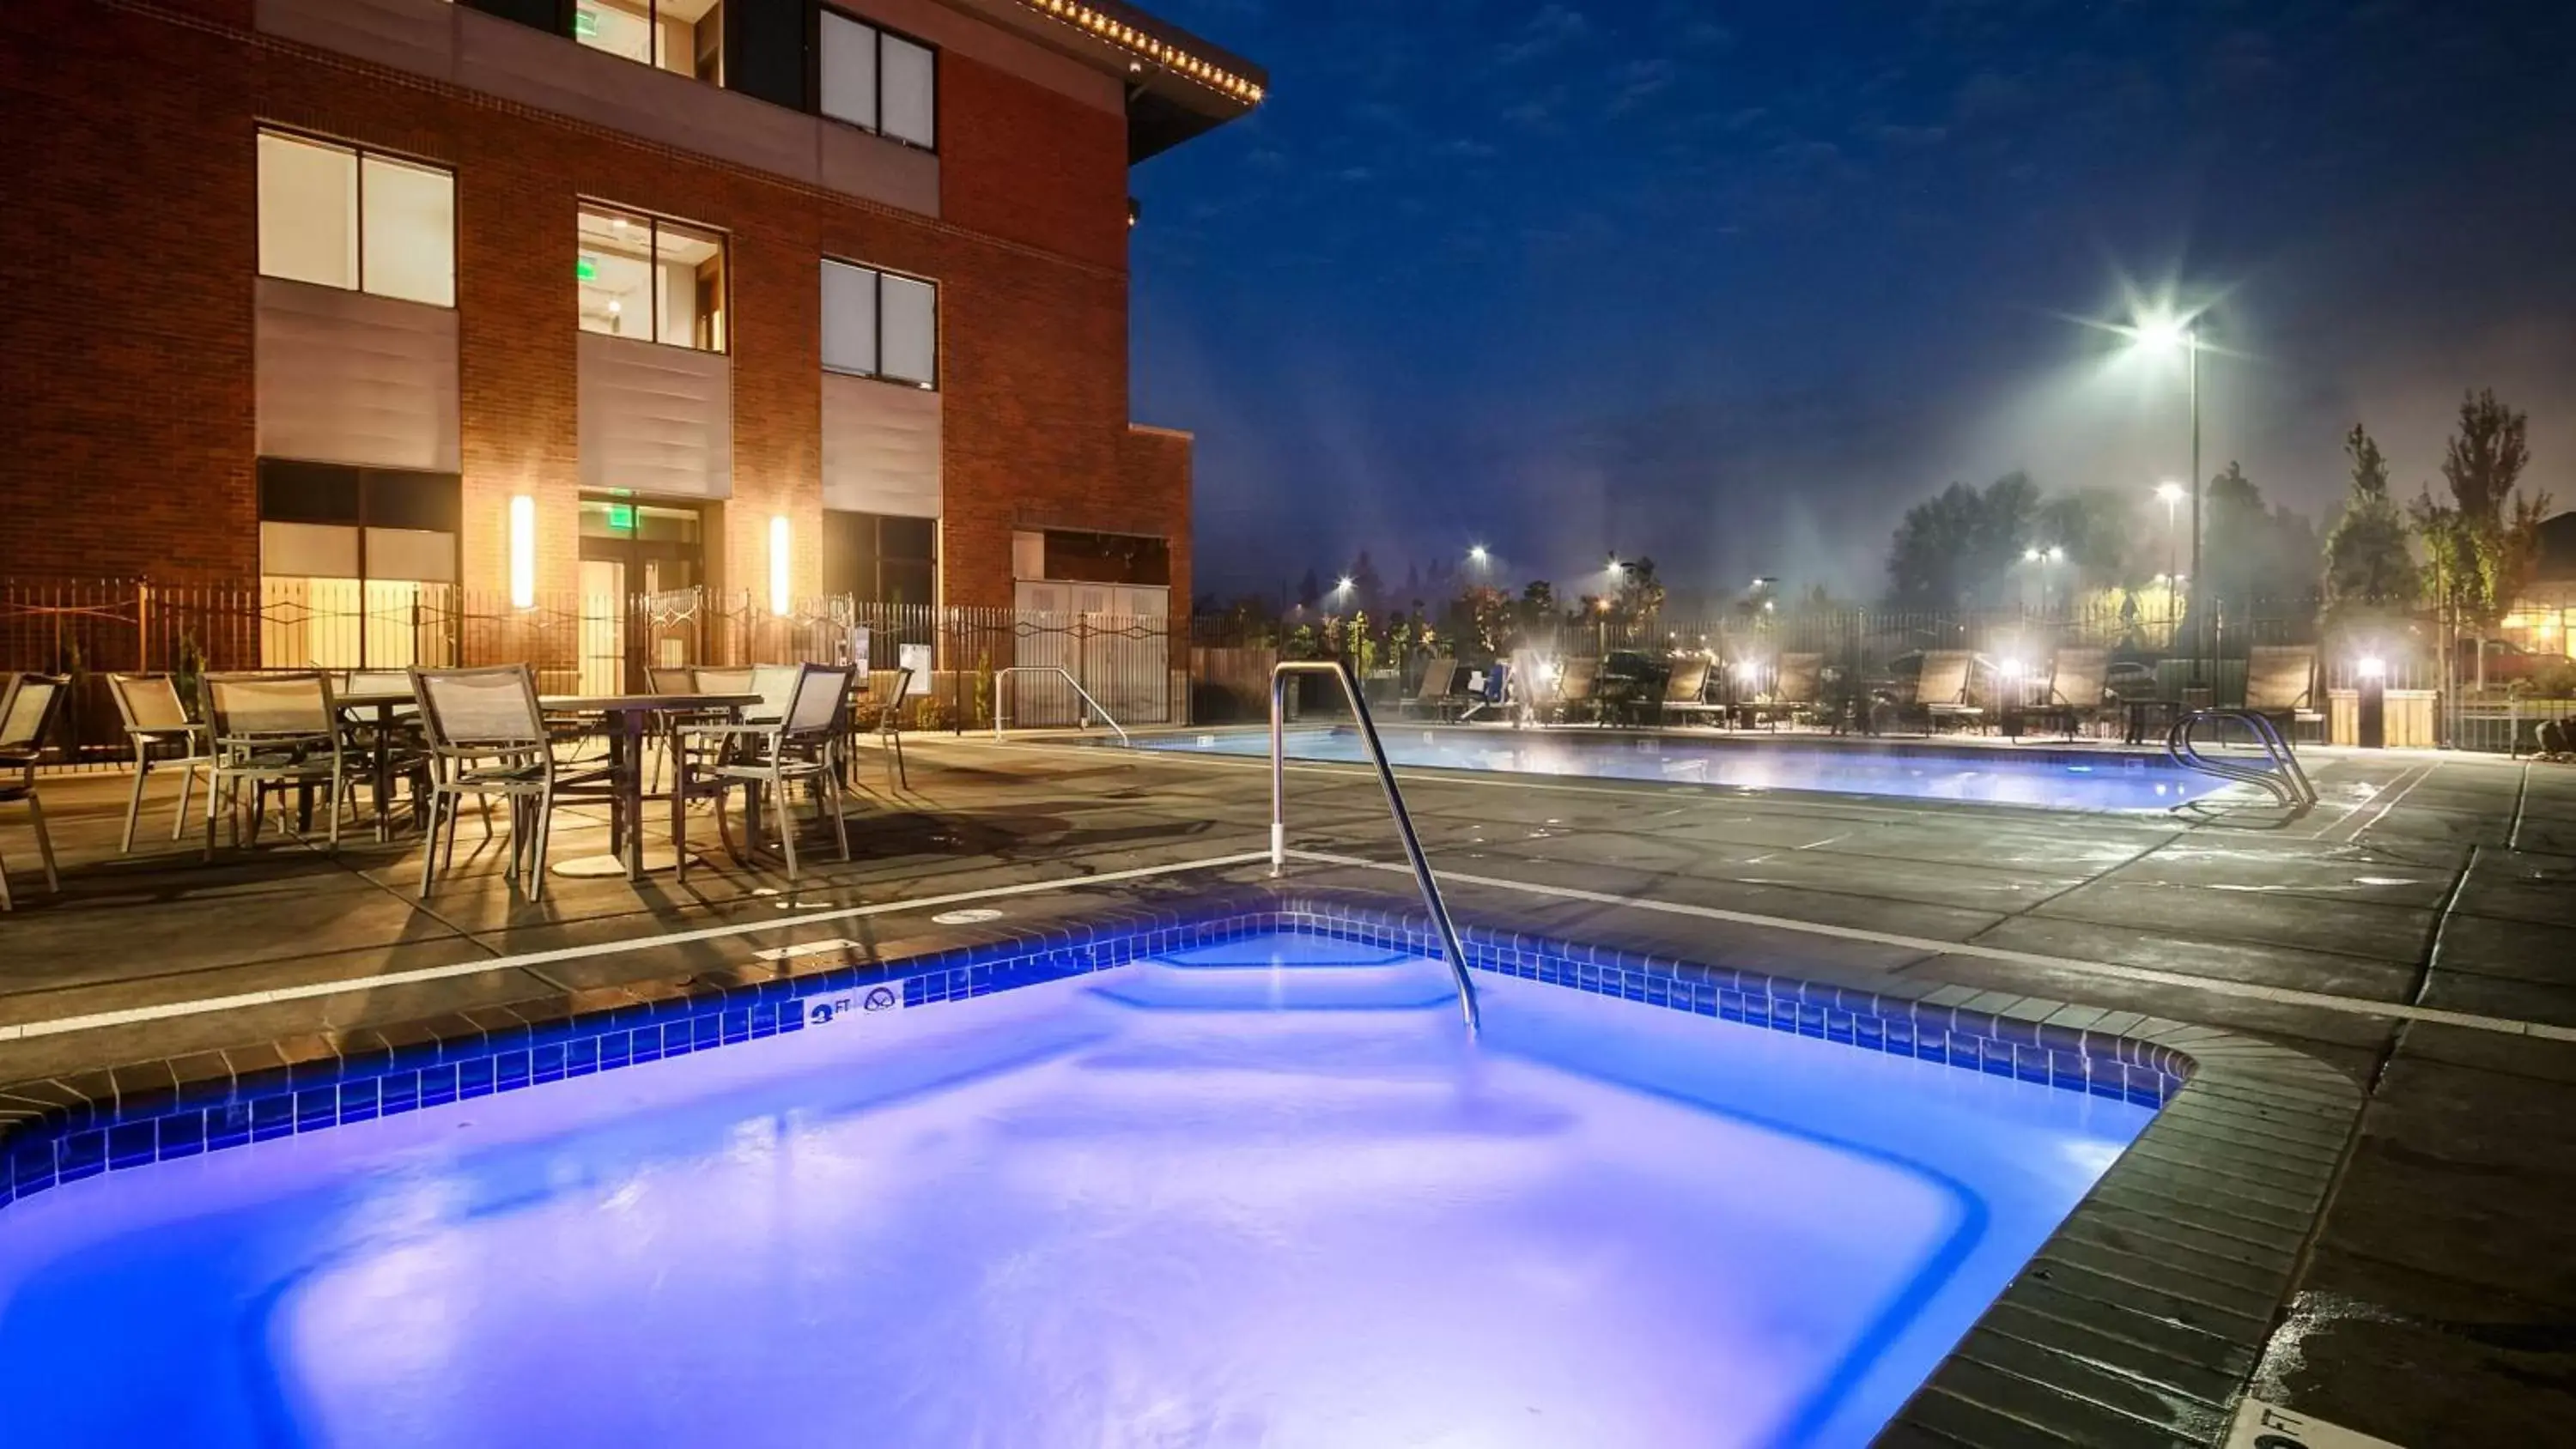 On site, Swimming Pool in Best Western Premier Boulder Falls Inn